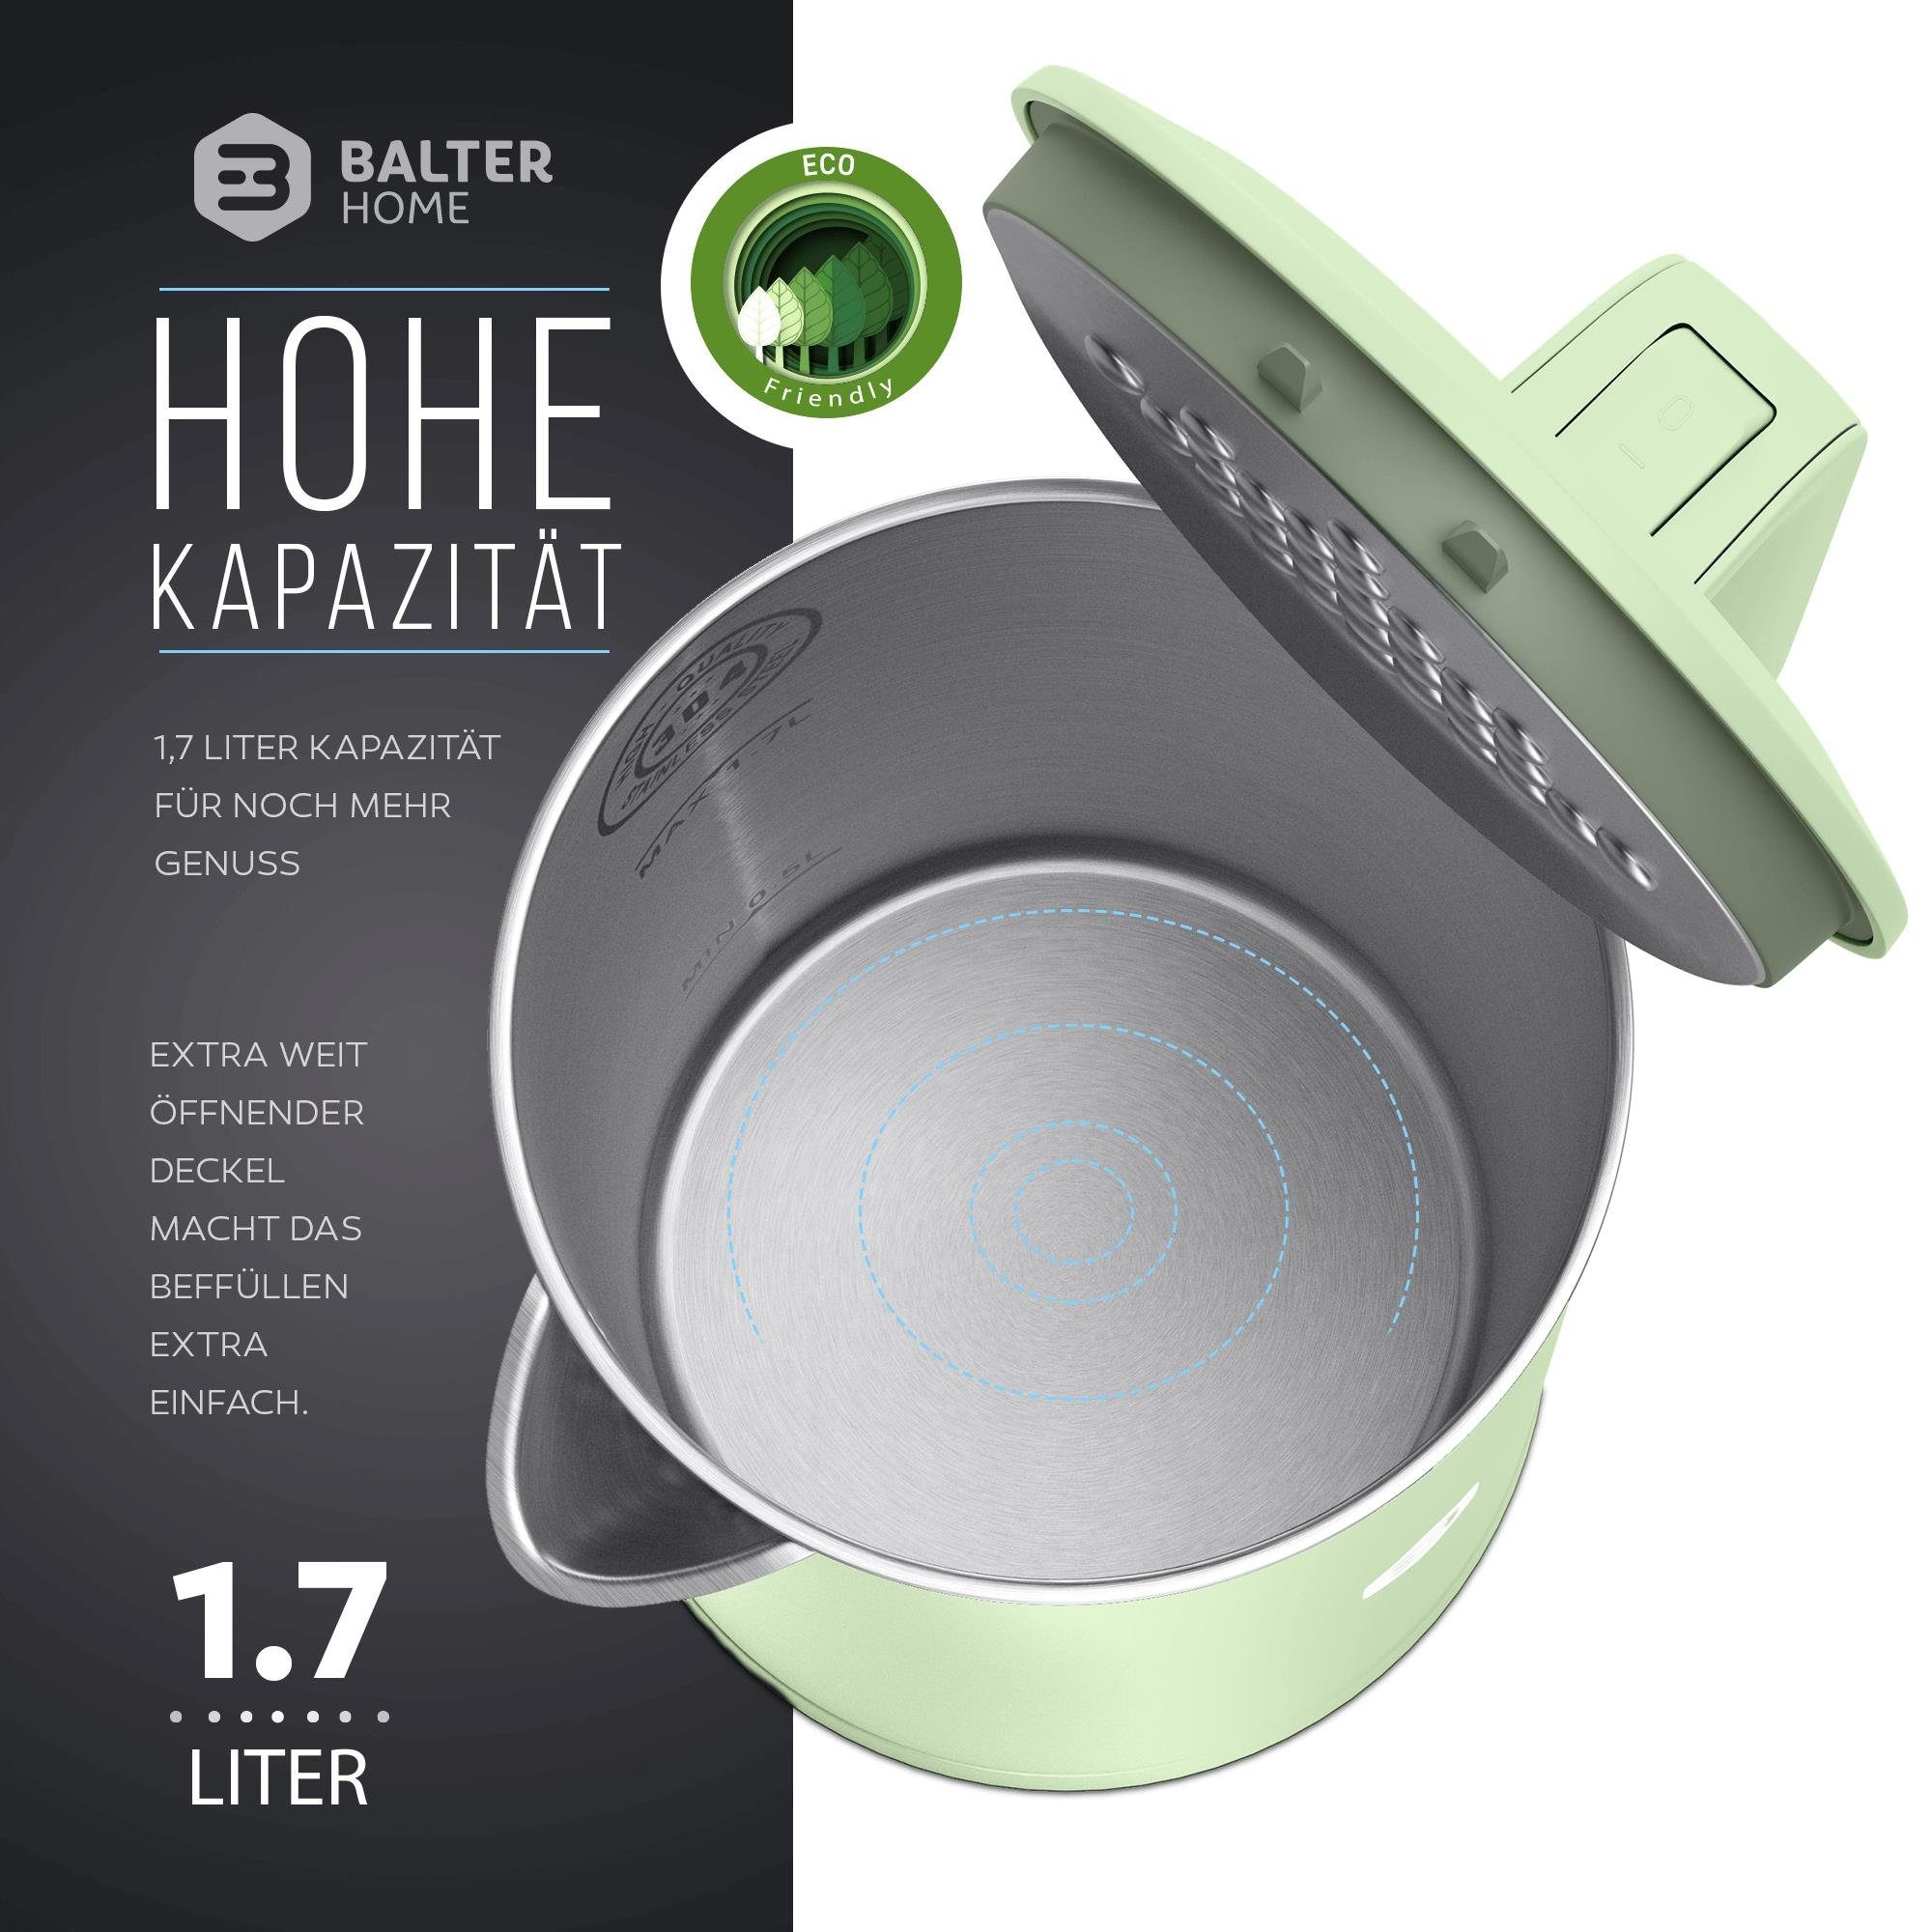 BPA 1,7 frei, minze Design, Balter Doppelwand Wasserkocher LED, Edelstahl, WK-4-MT, Liter,